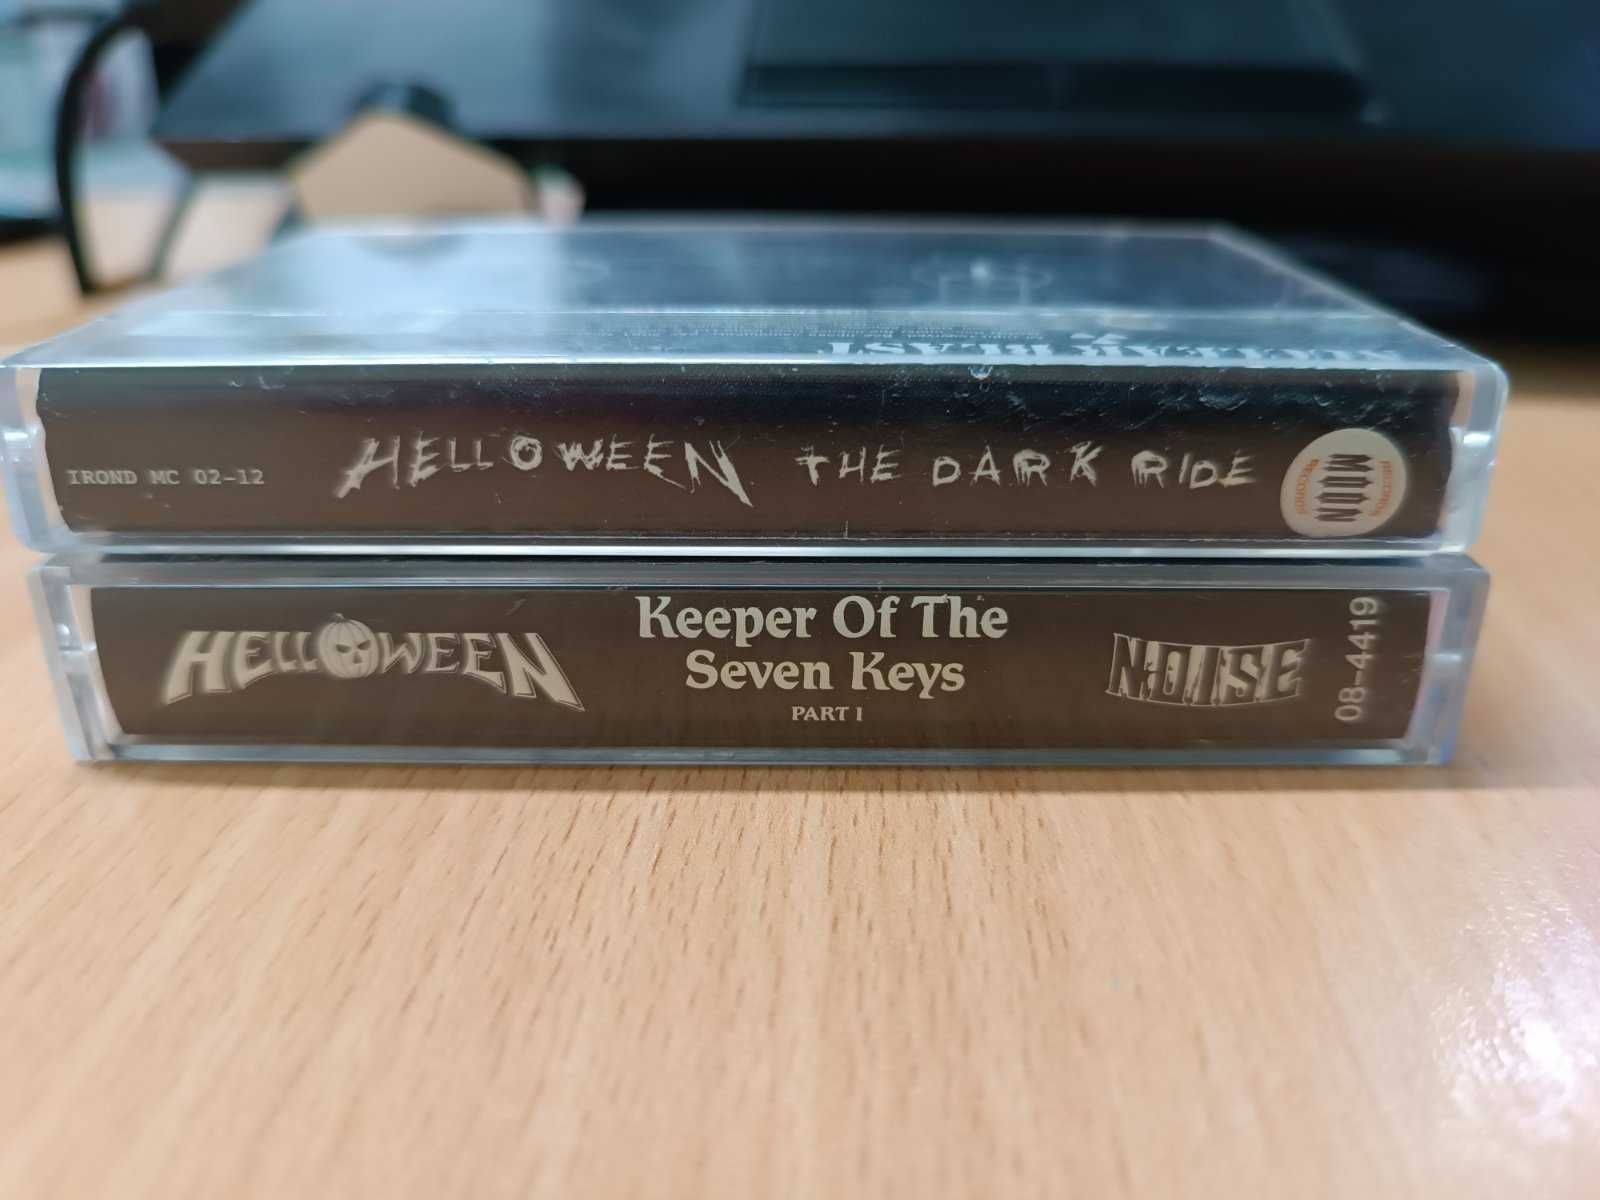 Аудиокассета Helloween – Keeper Of The Seven Keys Part1 +The Dark Ride